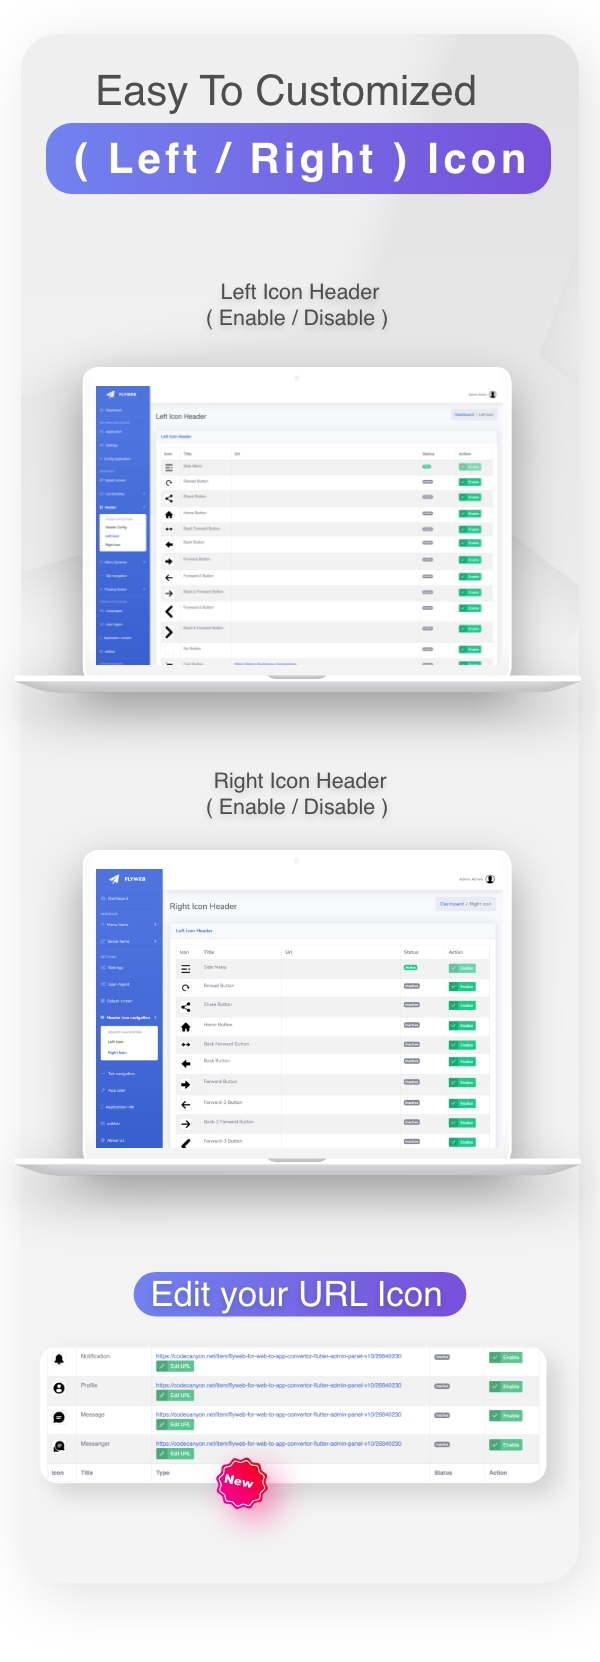 FlyWeb for Web to App Convertor Flutter + Admin Panel - 16